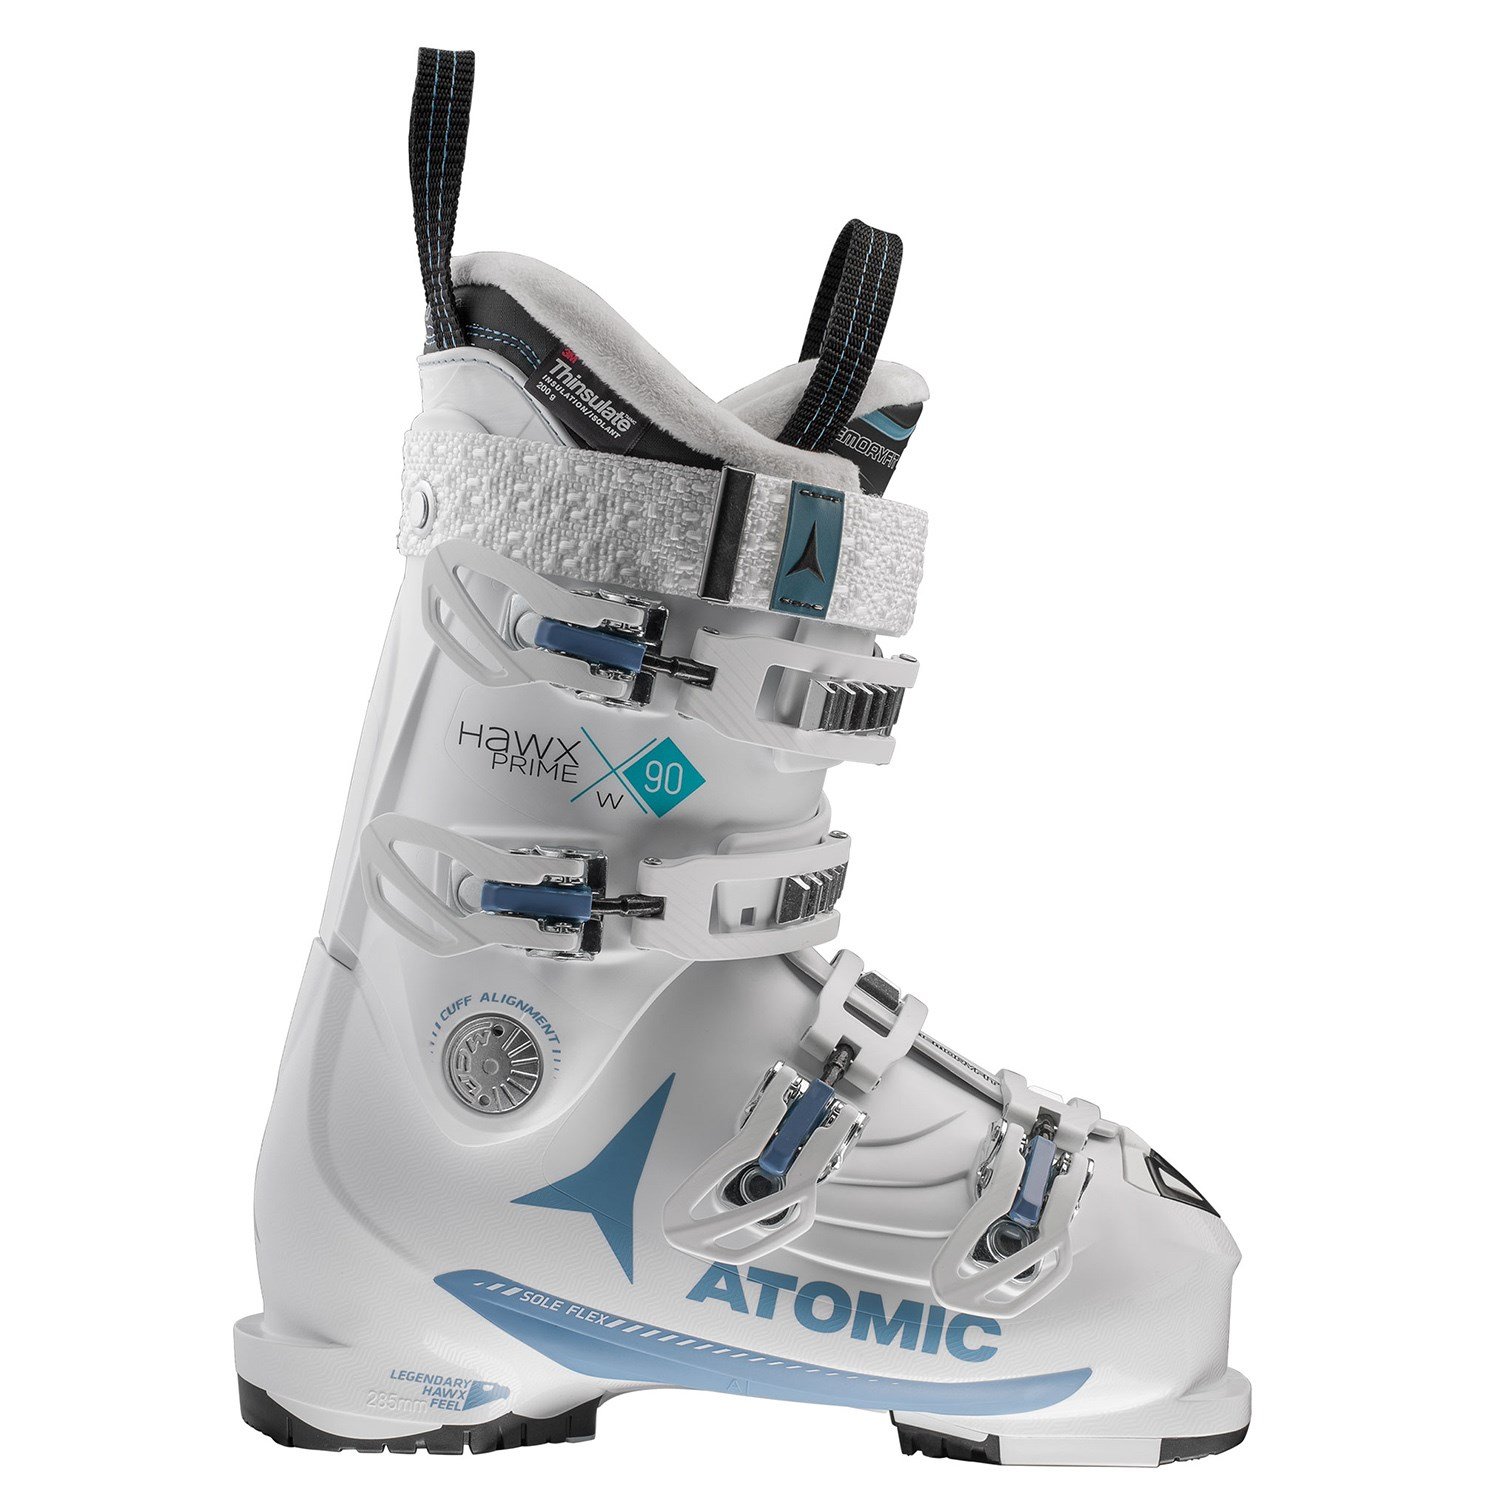 Atomic Hawx Prime 90 W Ski Boots - Women's 2017 | evo